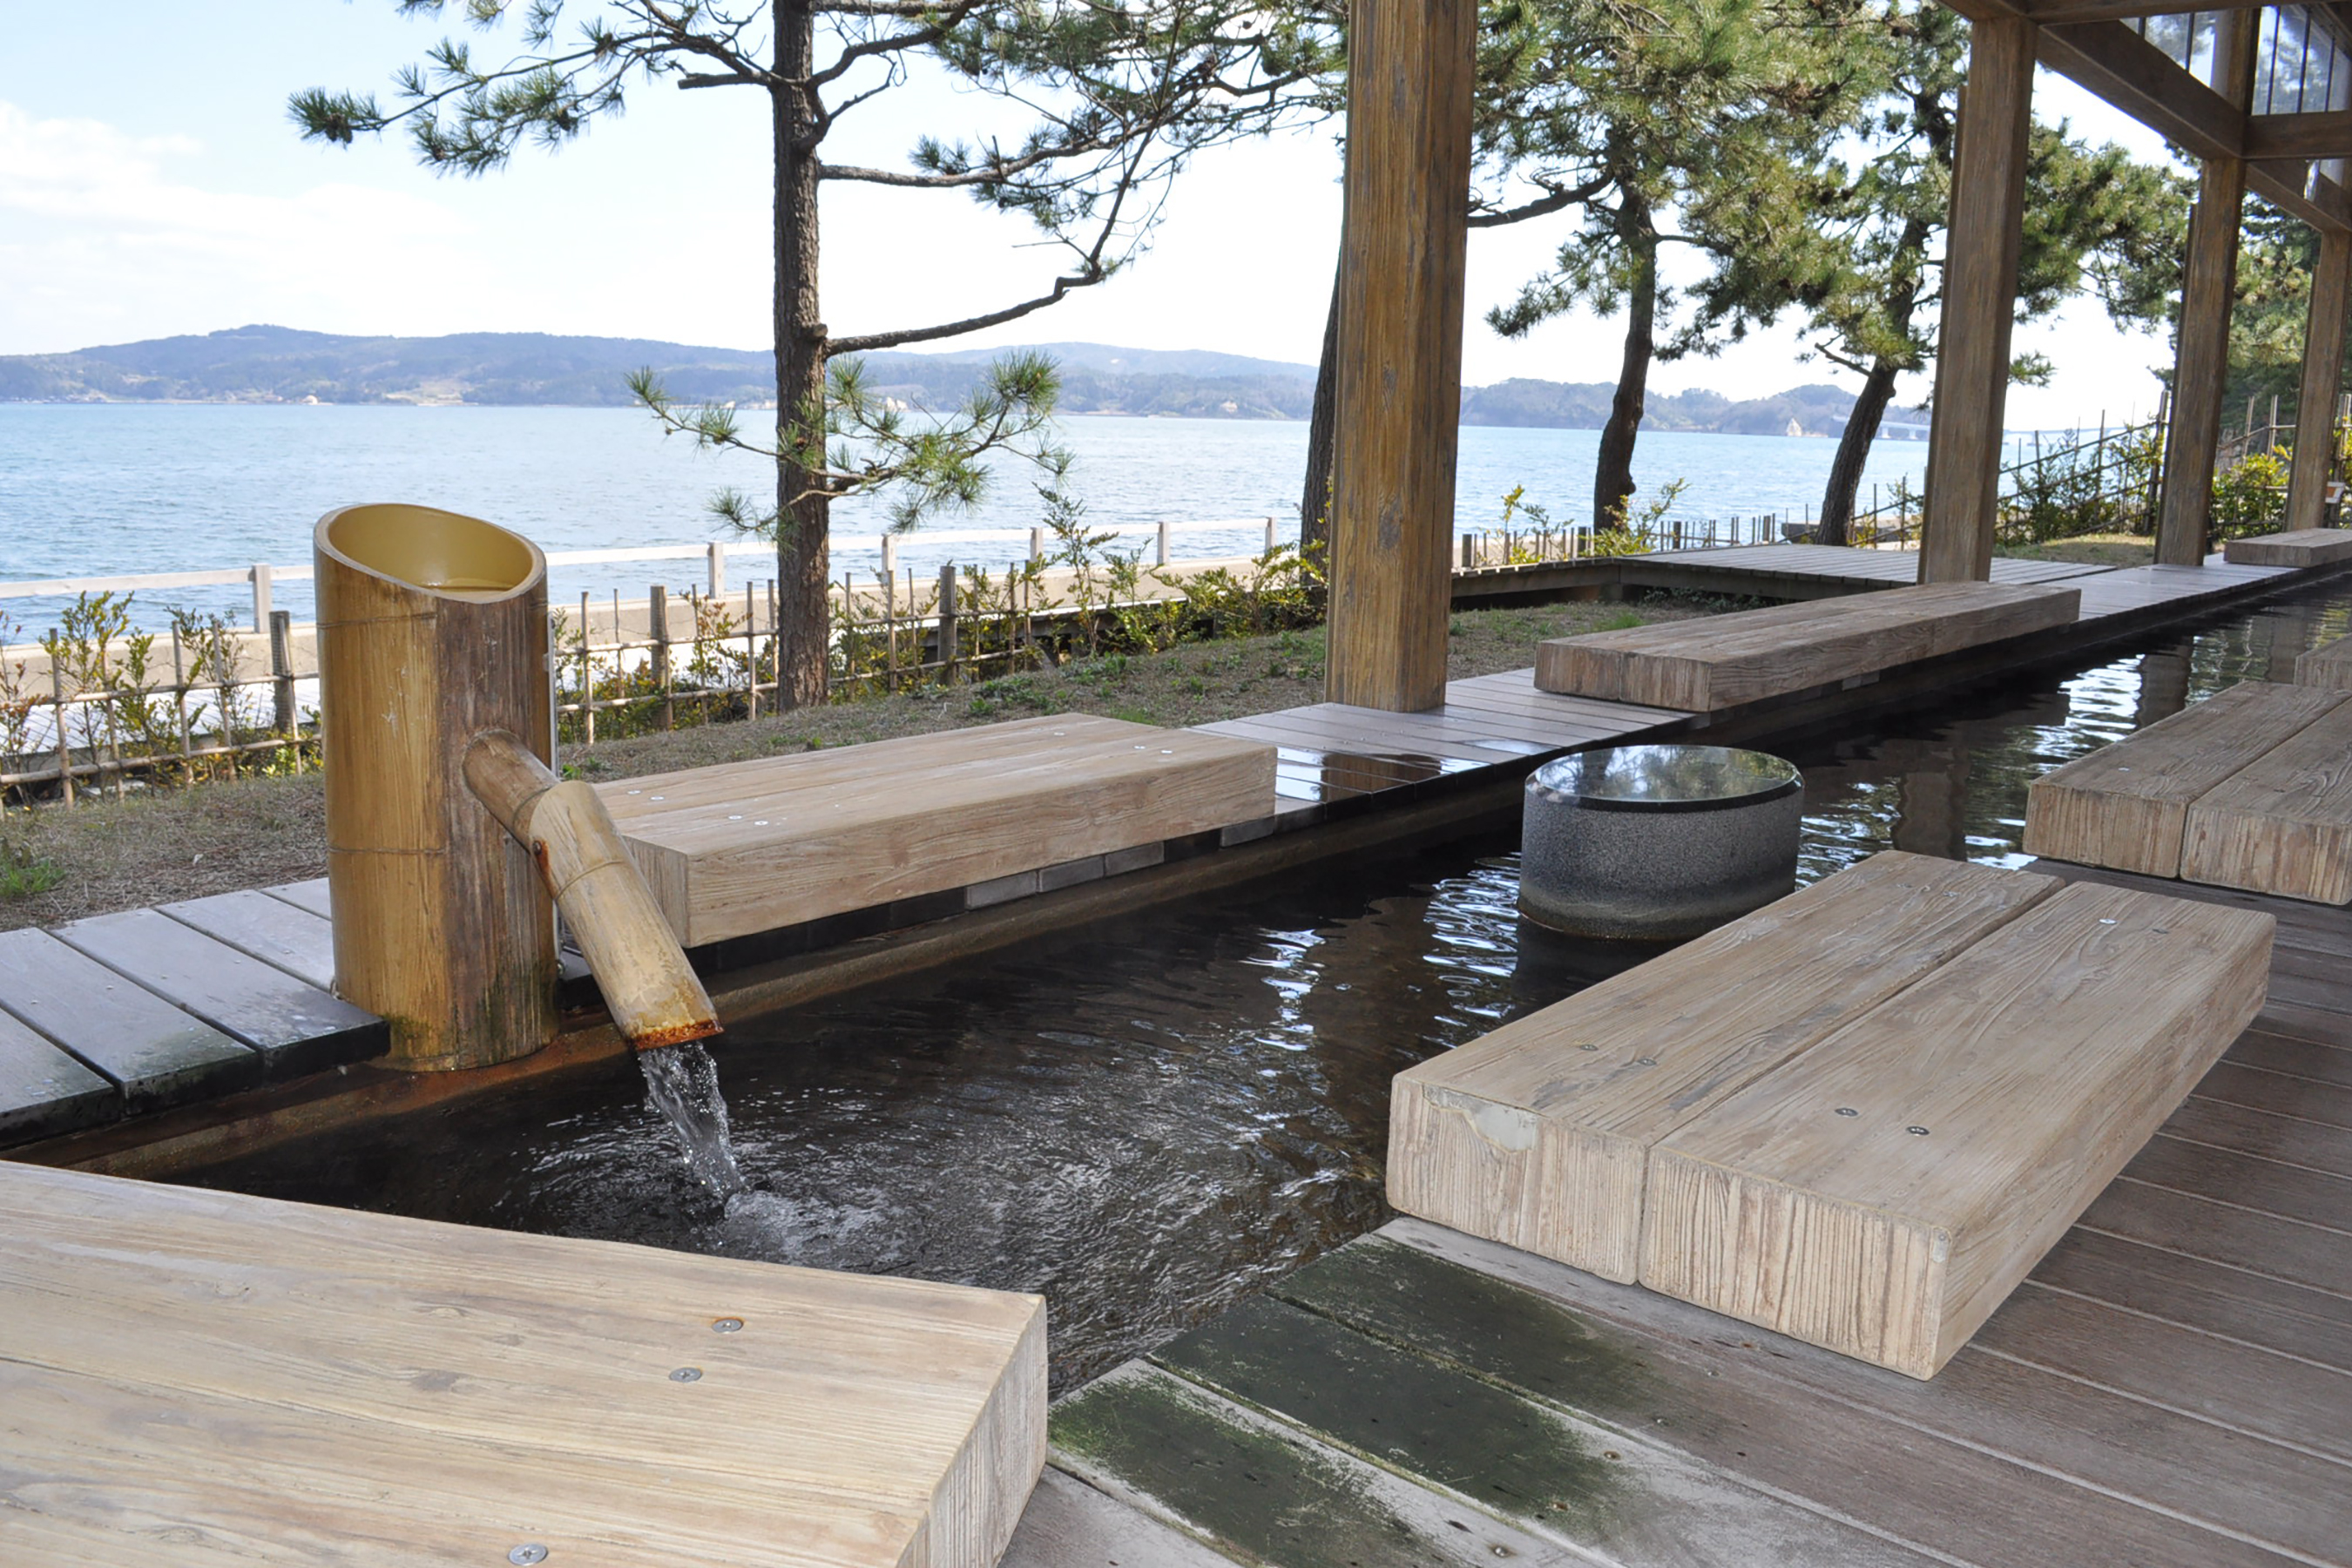 Wakura Onsen's footbath offers a beautiful sea view while you unwind